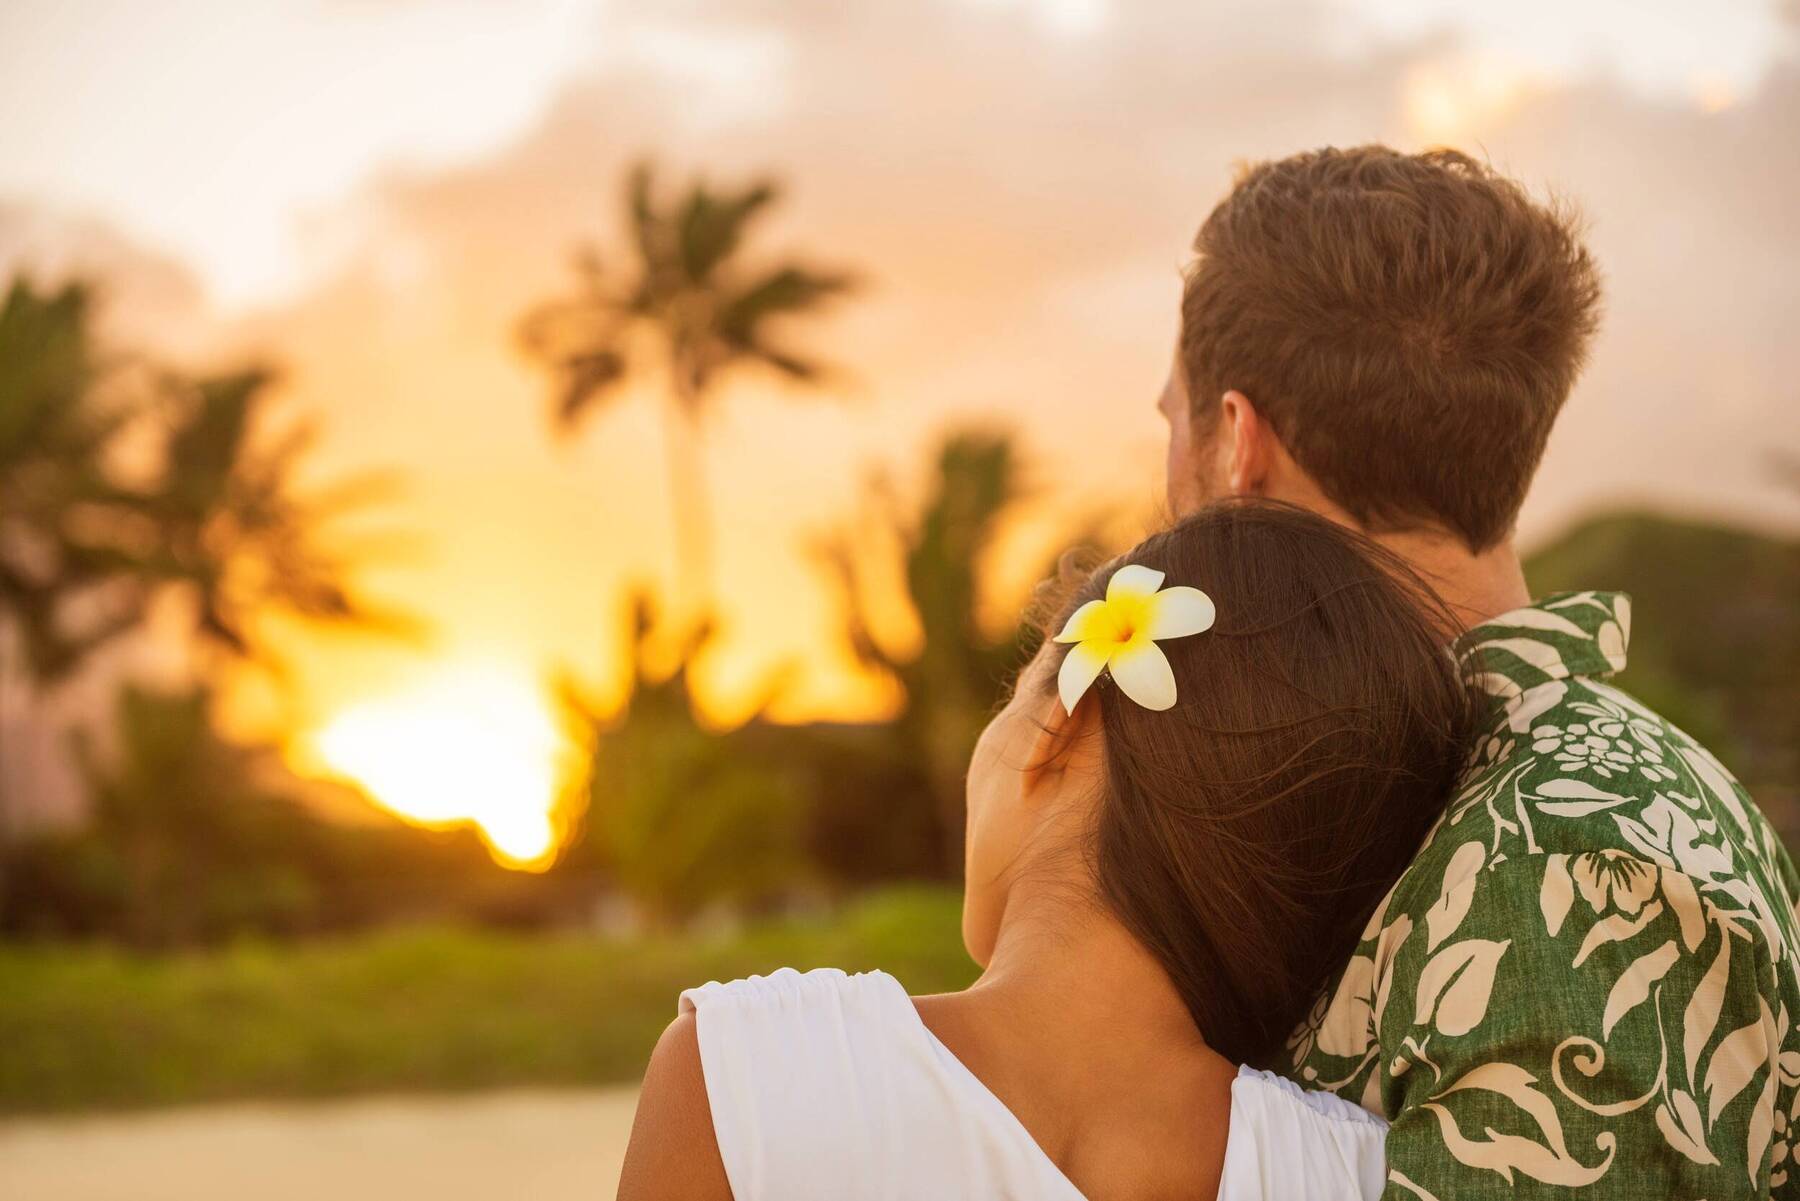 Marvellous Maui, A Perfect Hawaiian Holiday